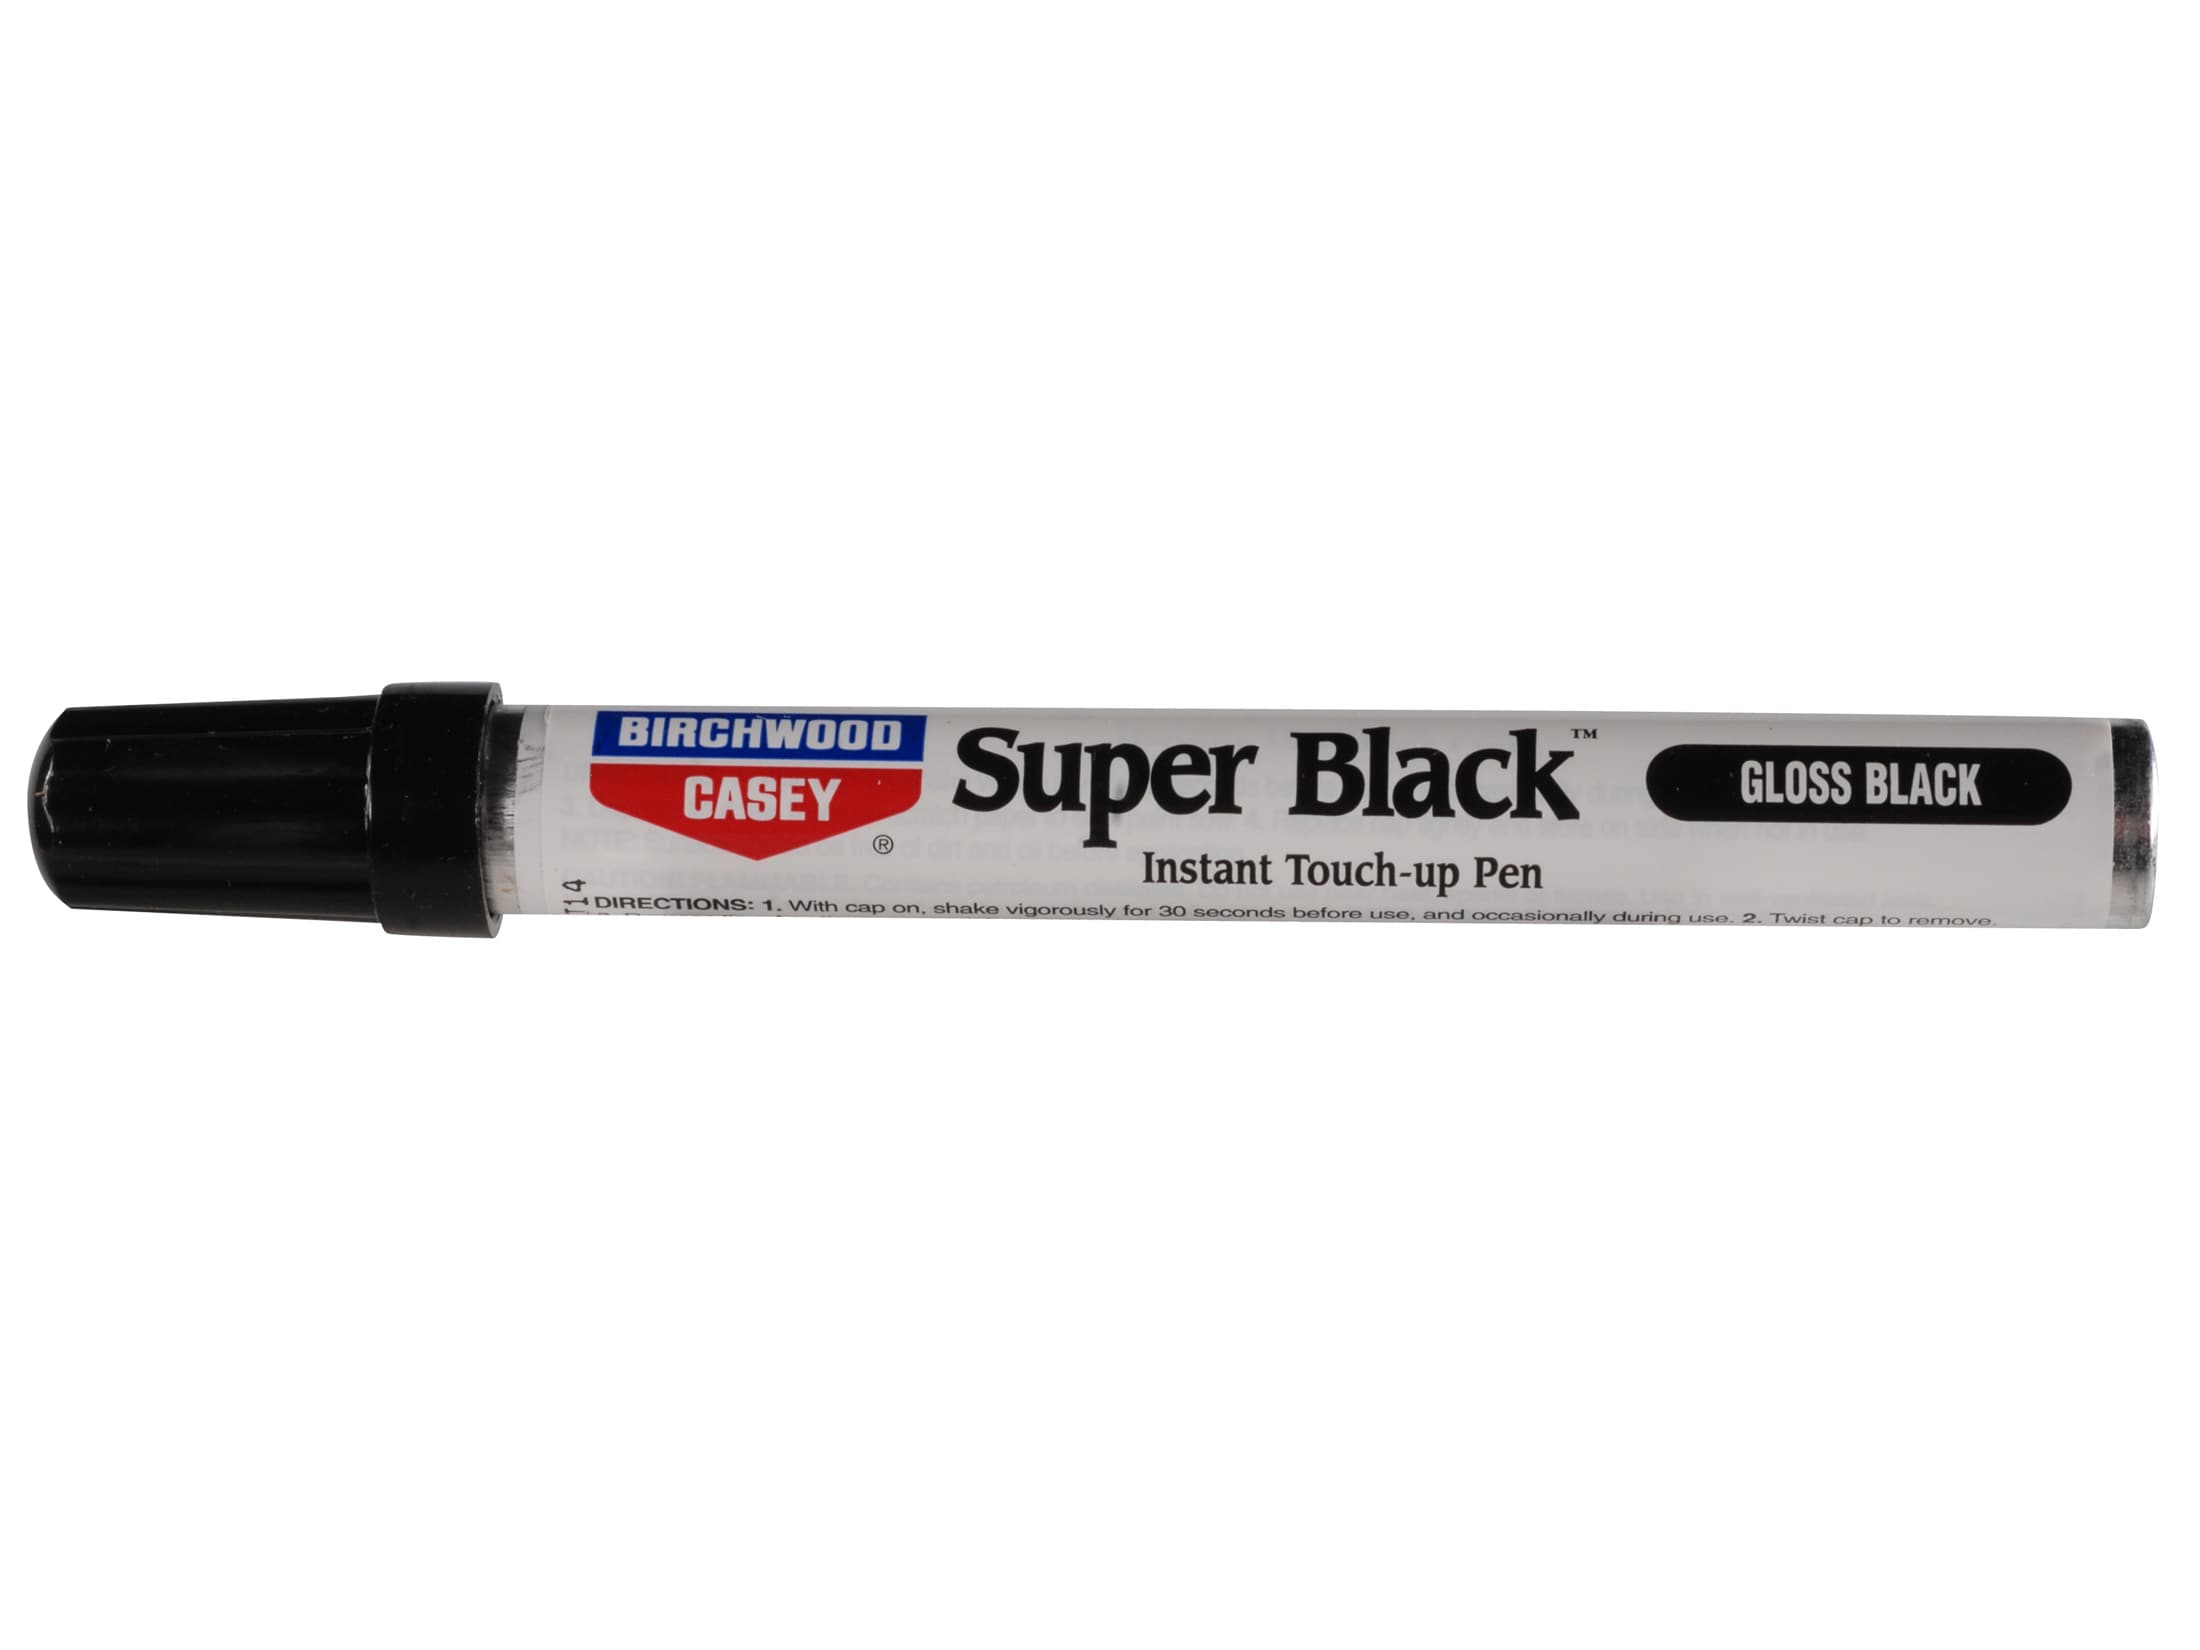 Casey Super Bright Gun Sight Paint Pen Kit fast-drying highest quality New 